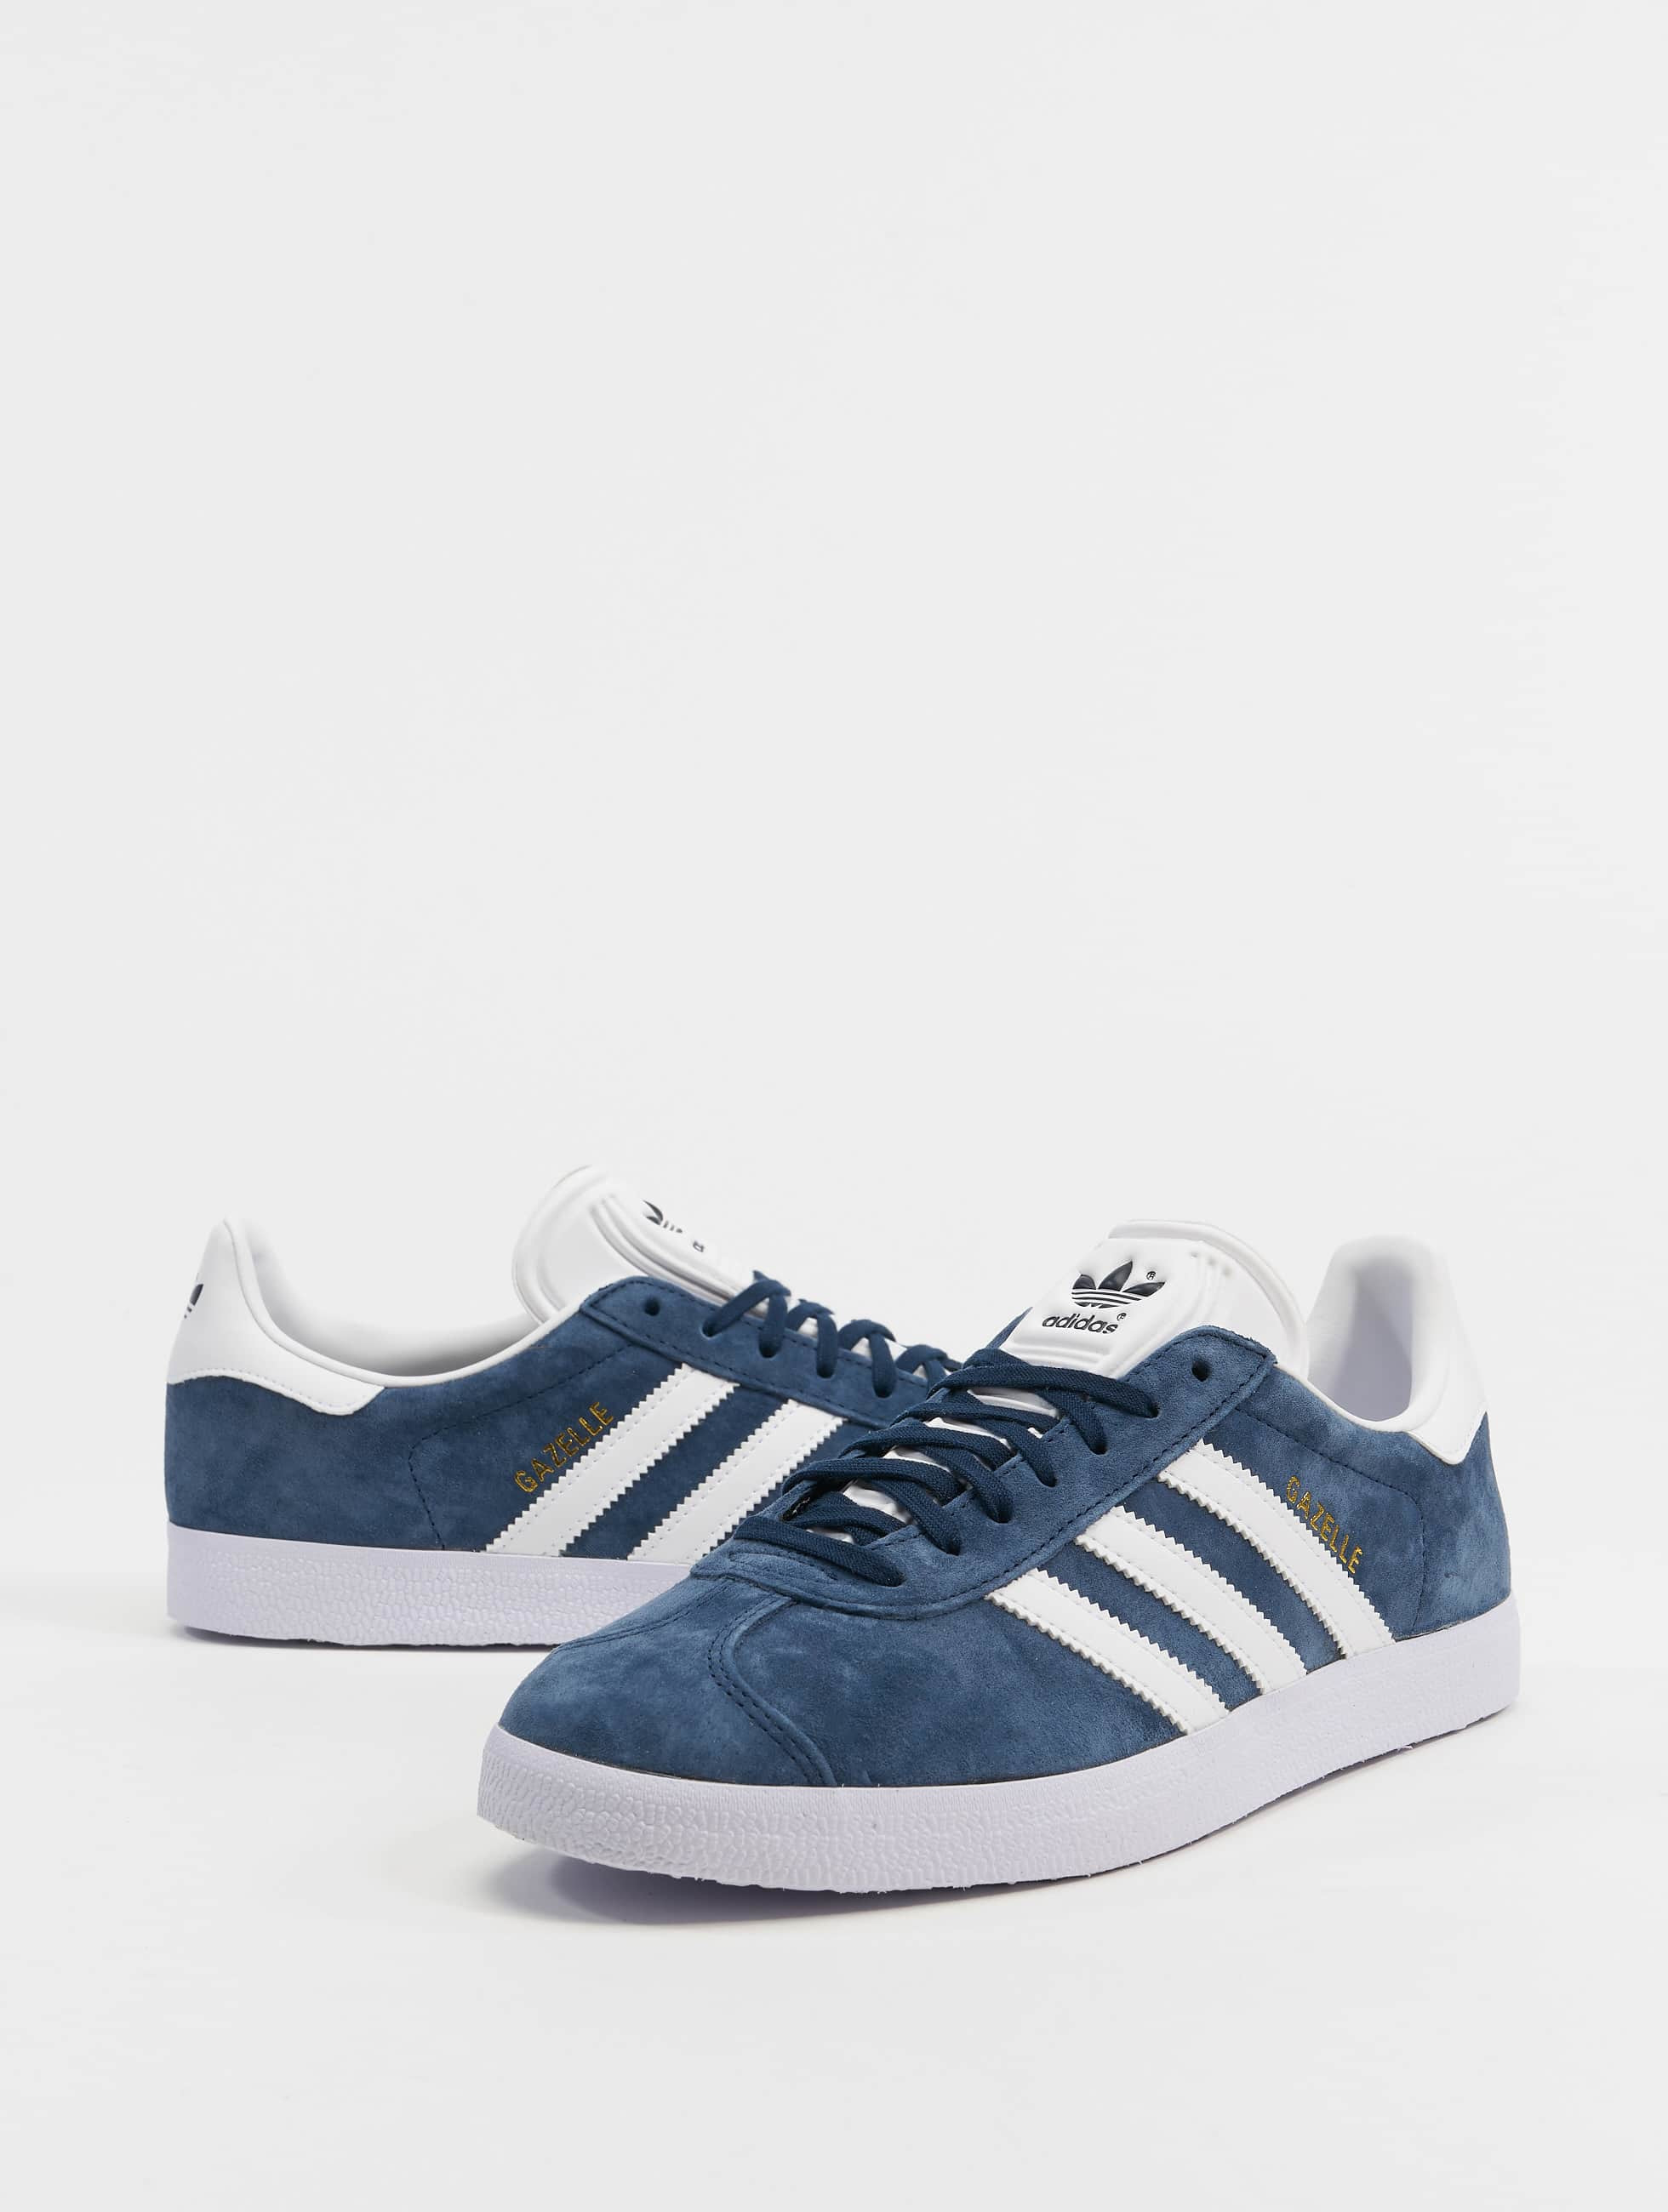 adidas Originals schoen / Gazelle in blauw 684093